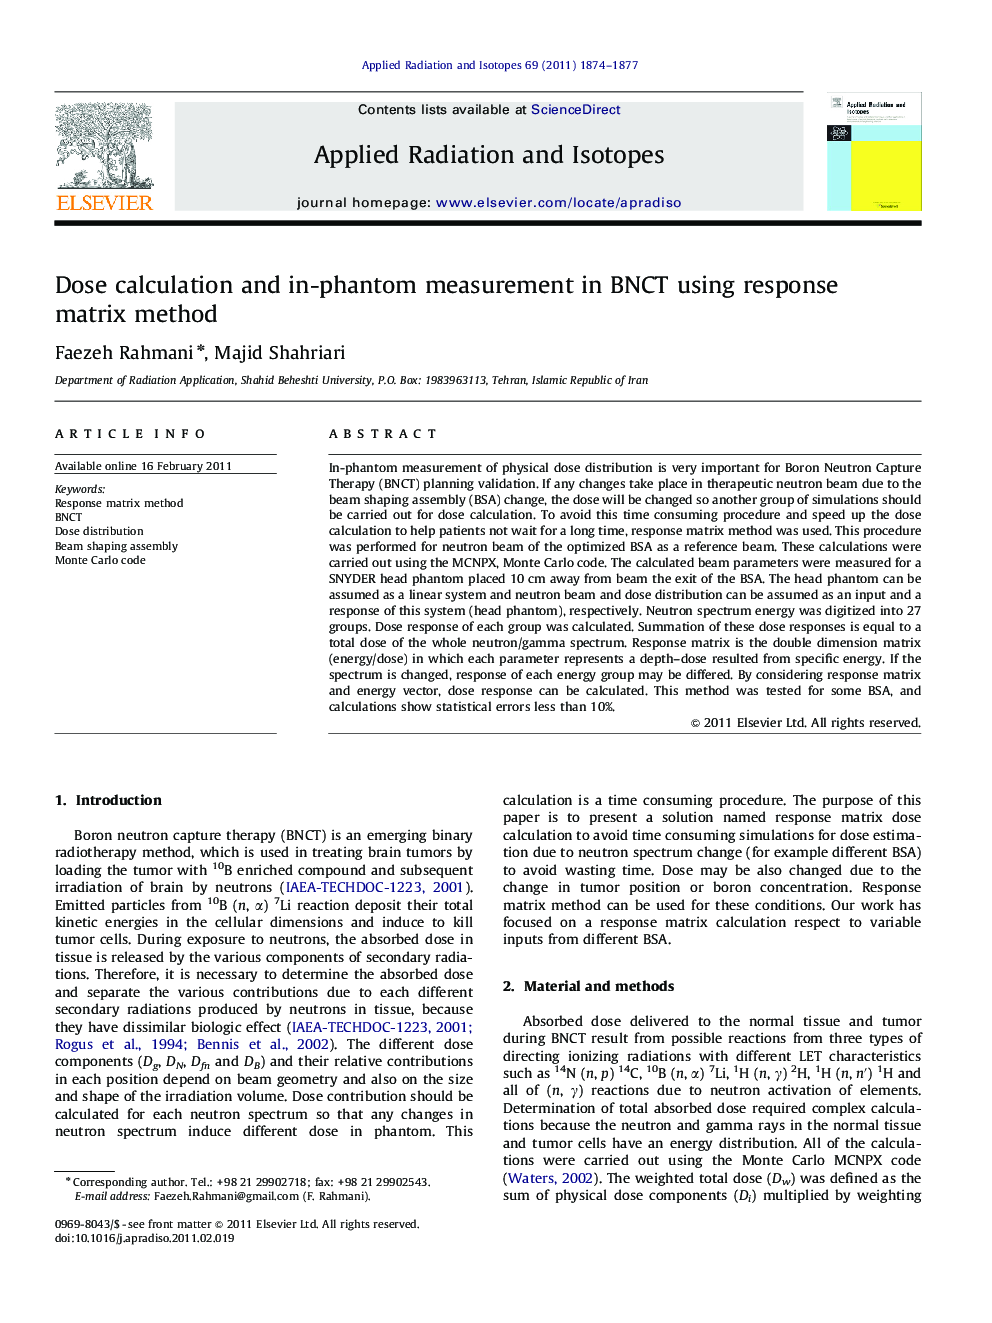 Dose calculation and in-phantom measurement in BNCT using response matrix method